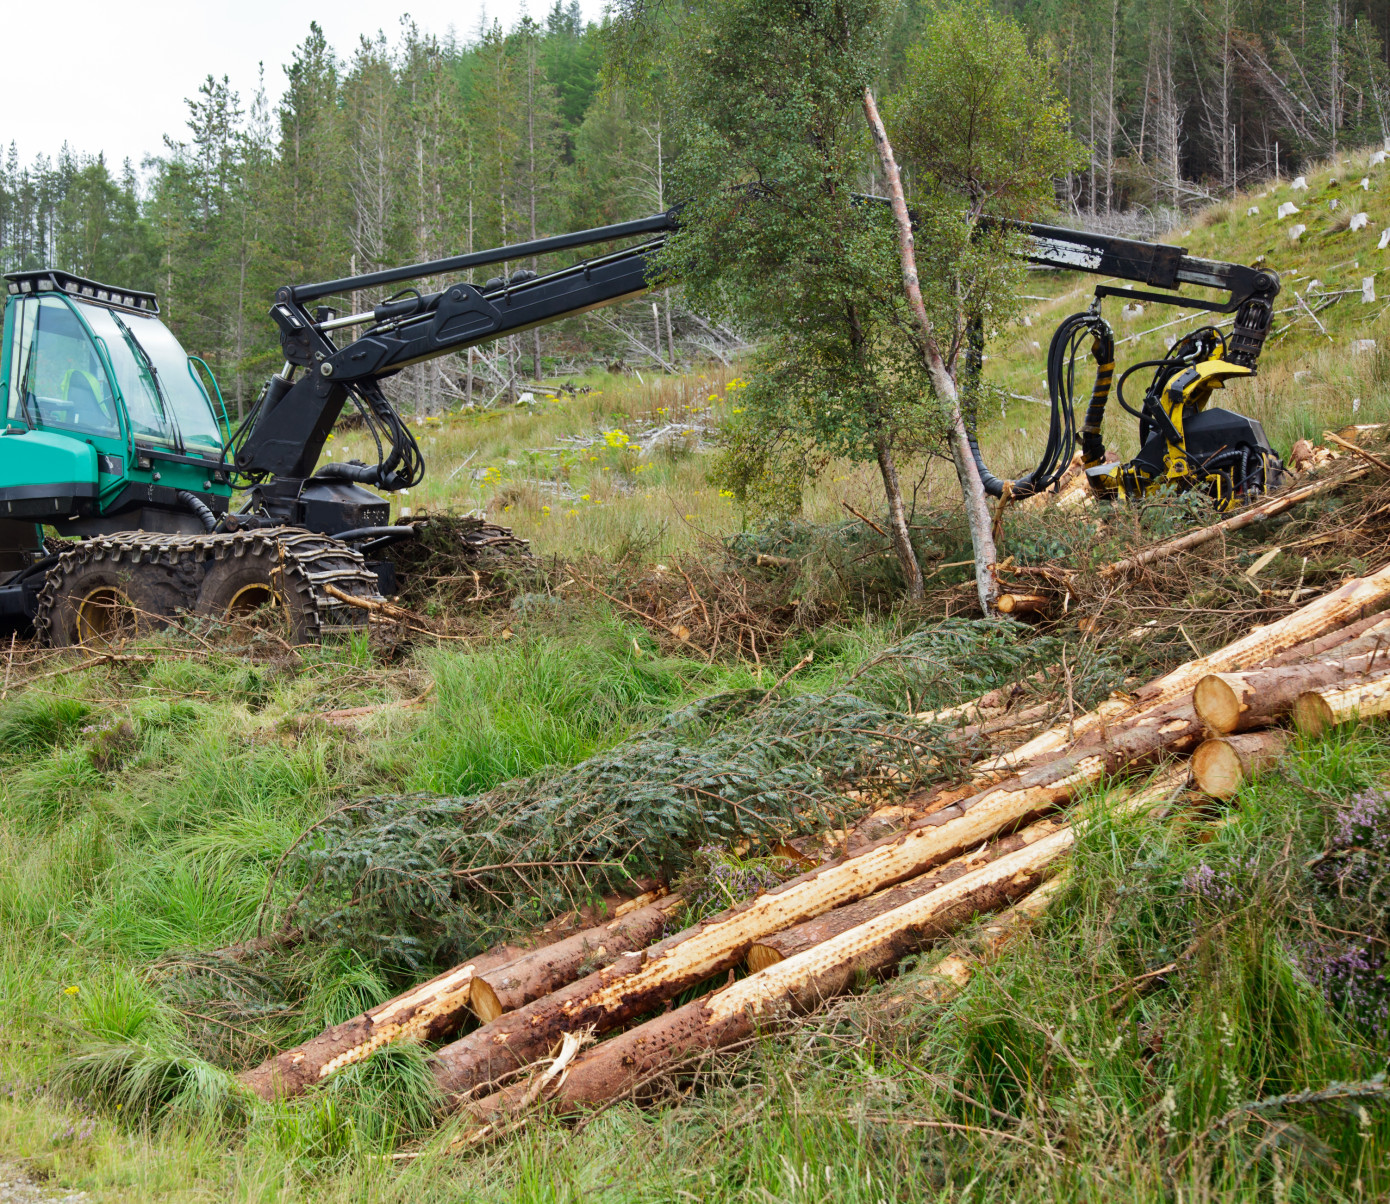 Sweden"s notified area for felling decreased by 20% in December